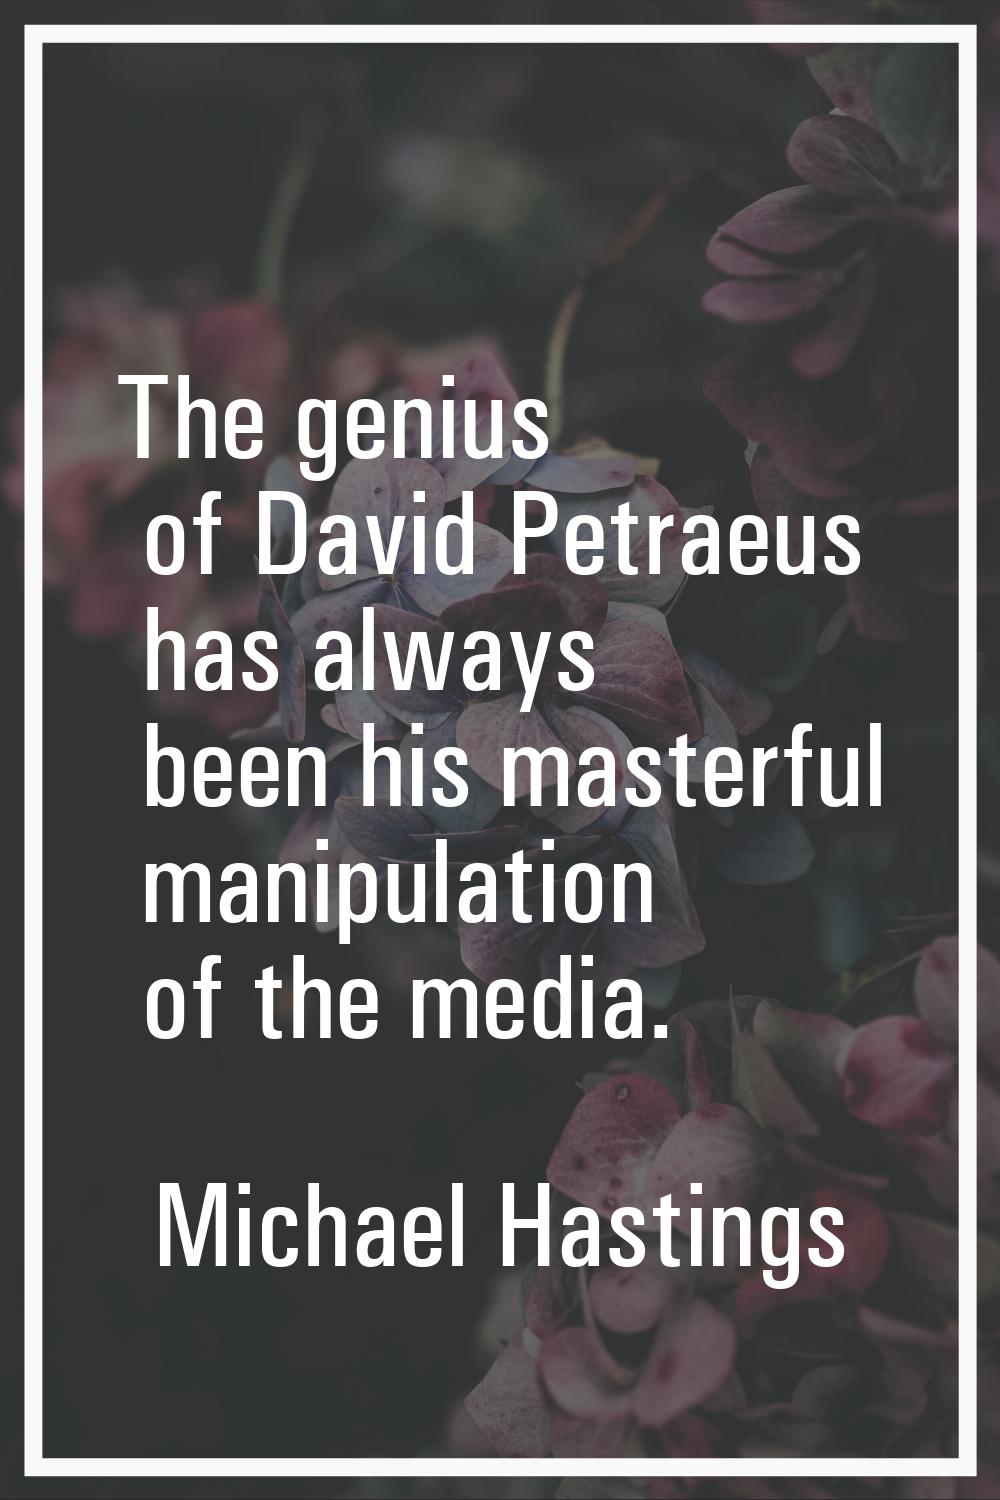 The genius of David Petraeus has always been his masterful manipulation of the media.